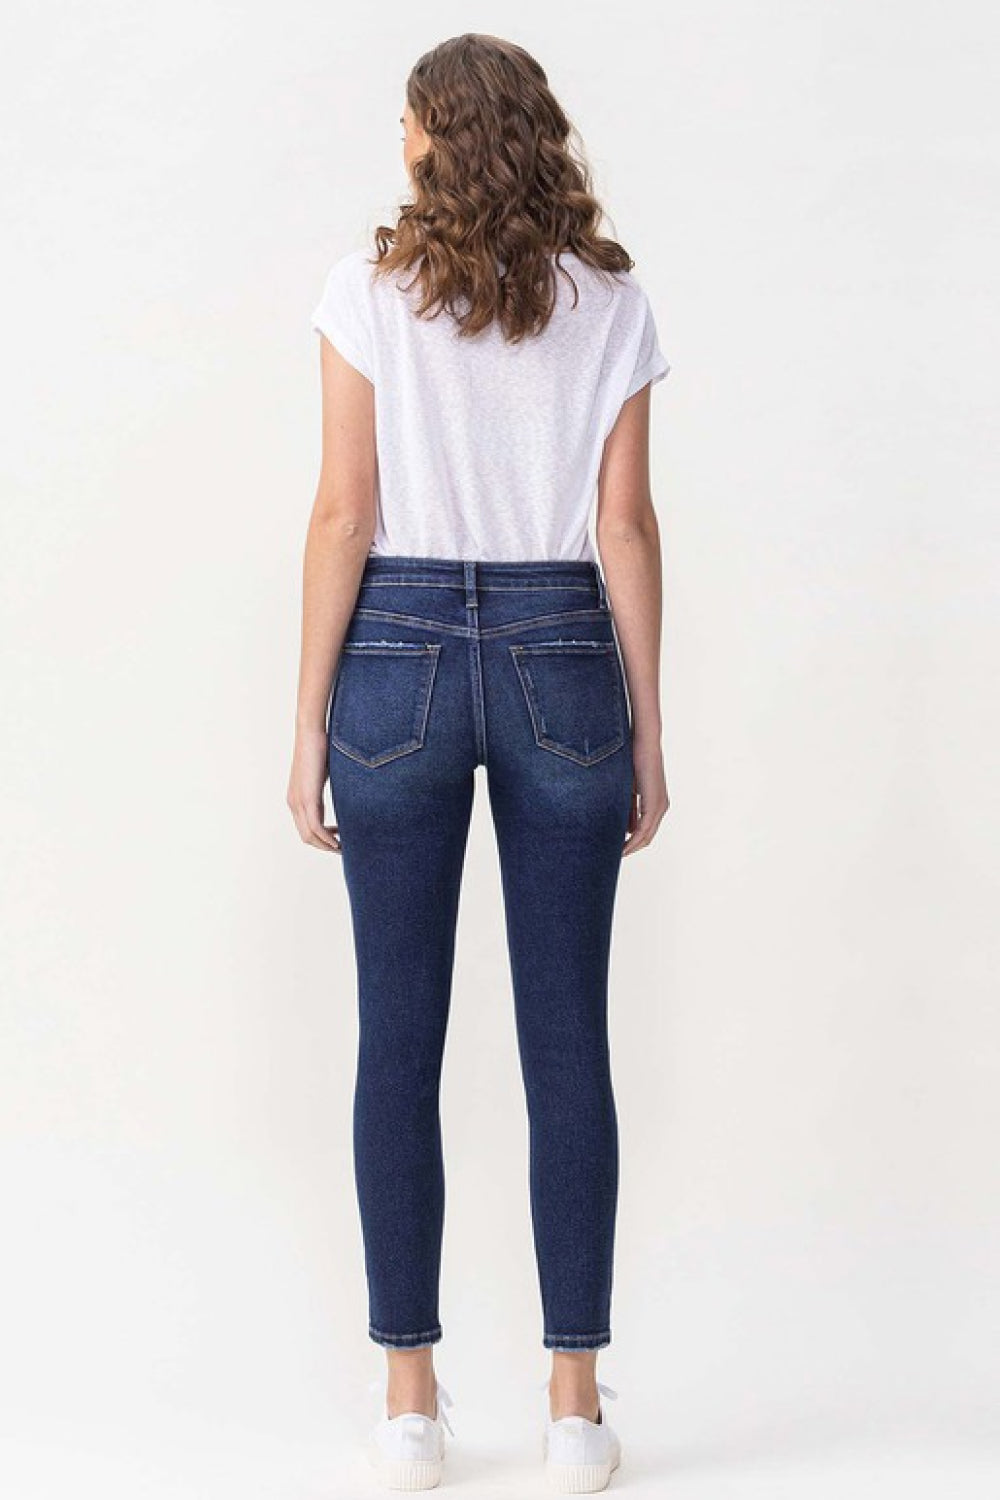 Lovervet Full Size Chelsea Midrise Crop Skinny Jeans - SKDZ